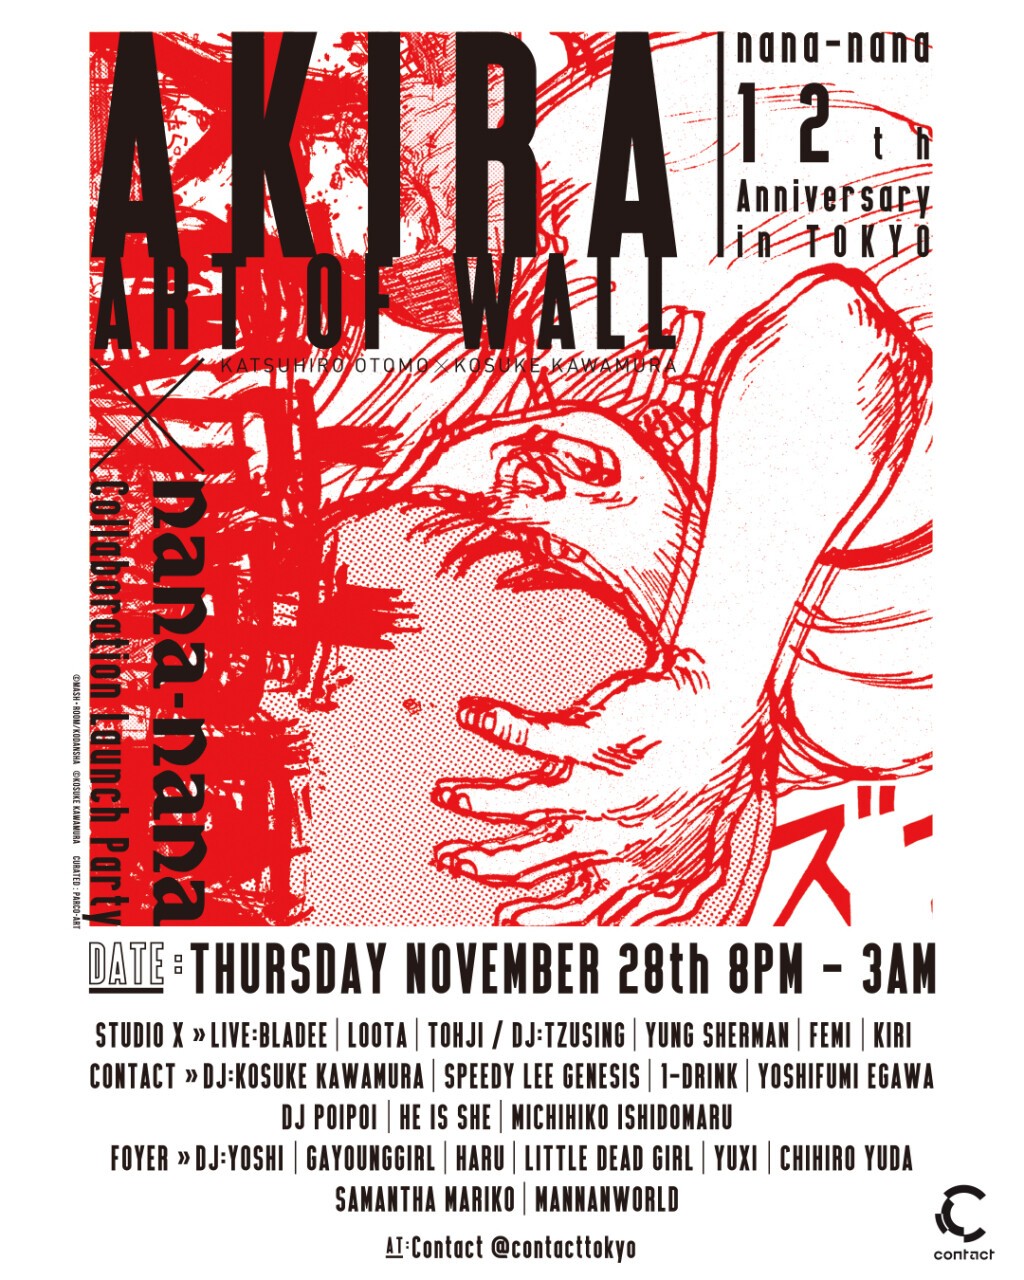 iFLYER: AKIRA Art of Wall x nana-nana Collaboration Launch Party